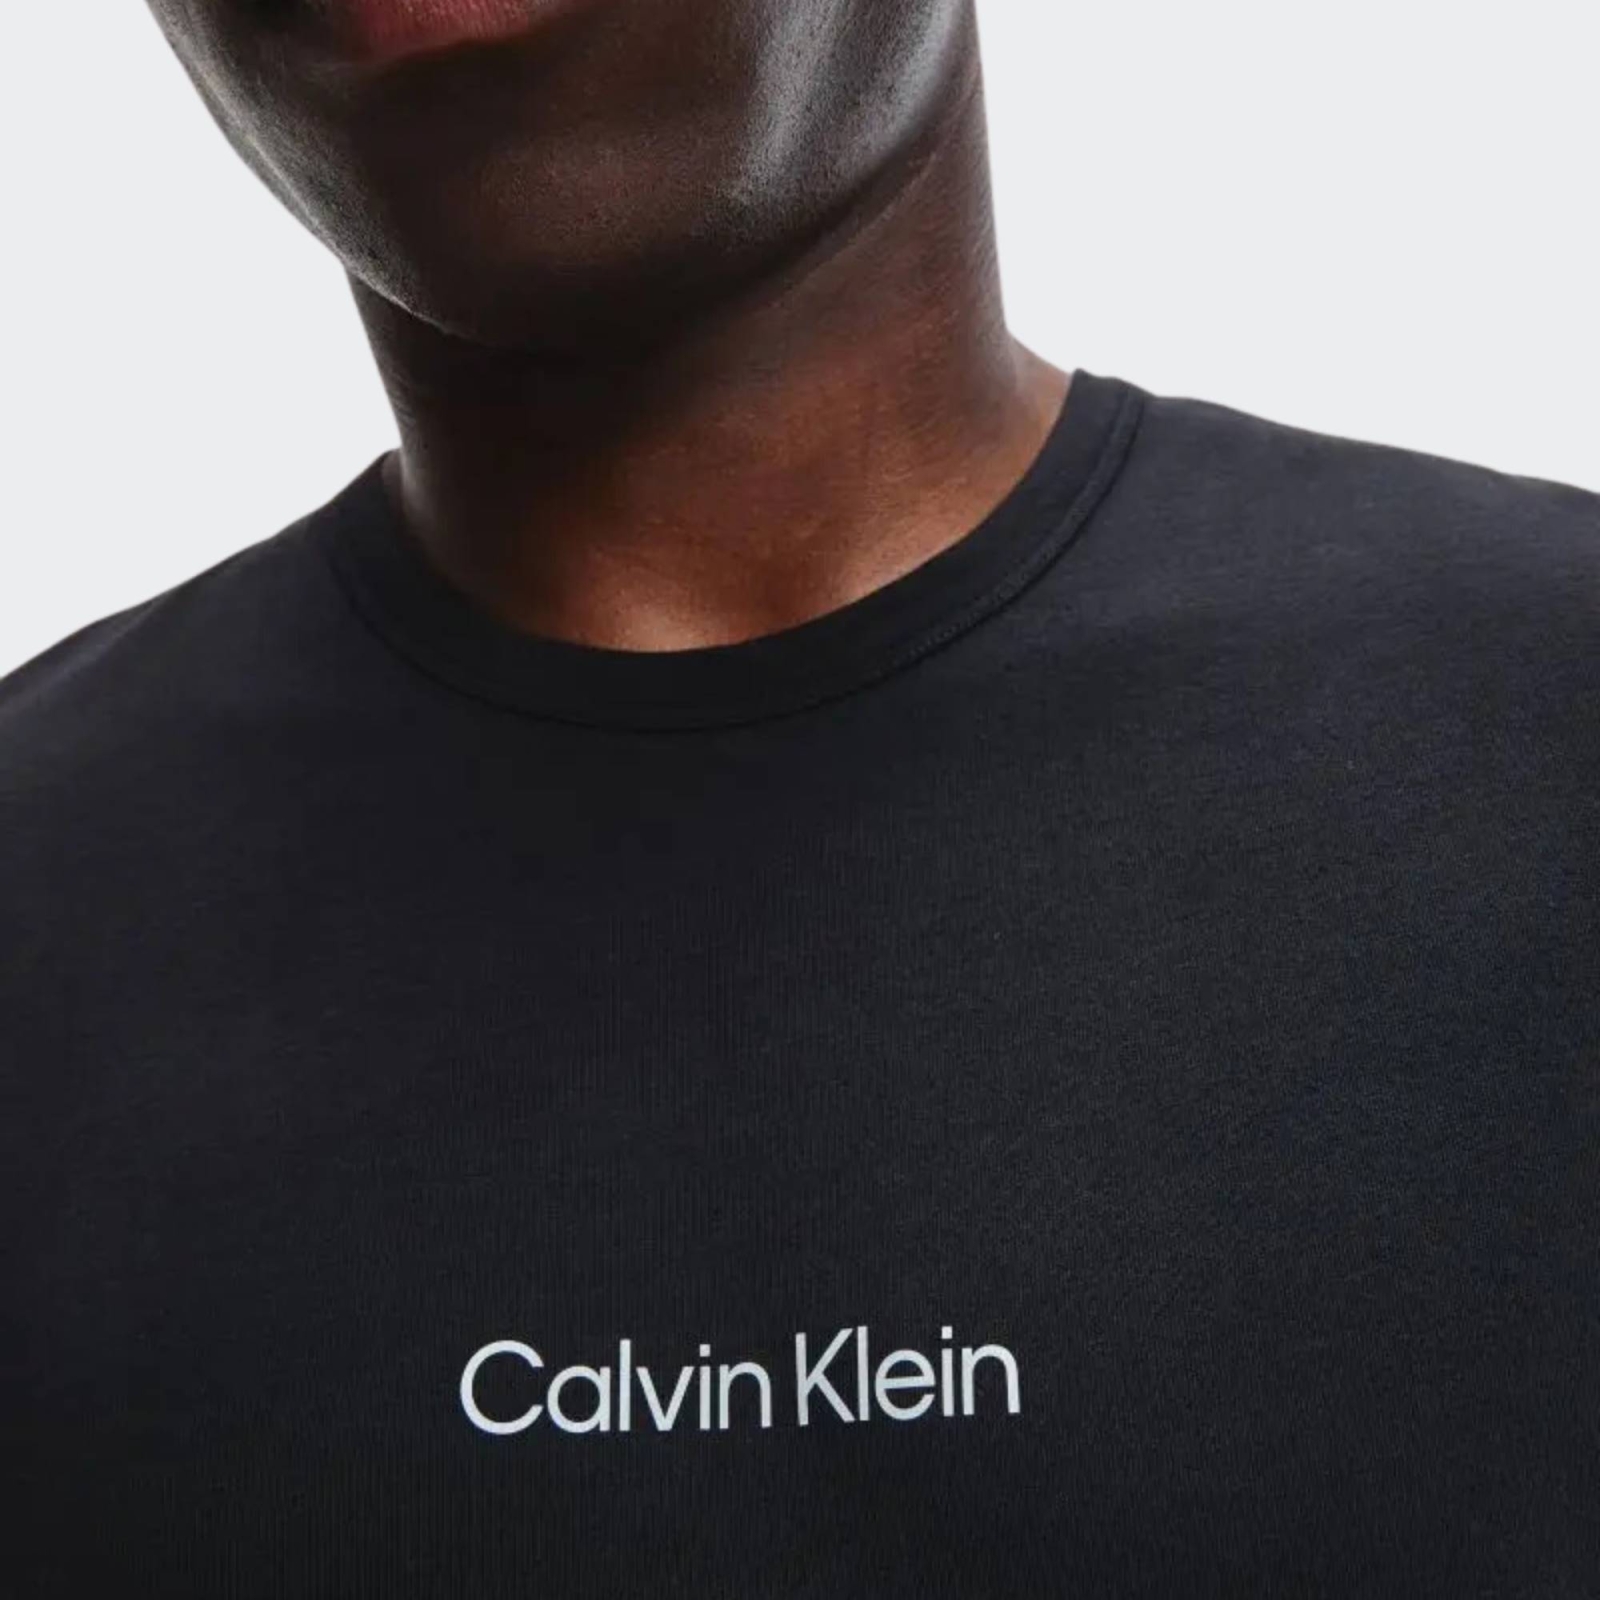 CALVIN KLEIN S/S CREW NECK